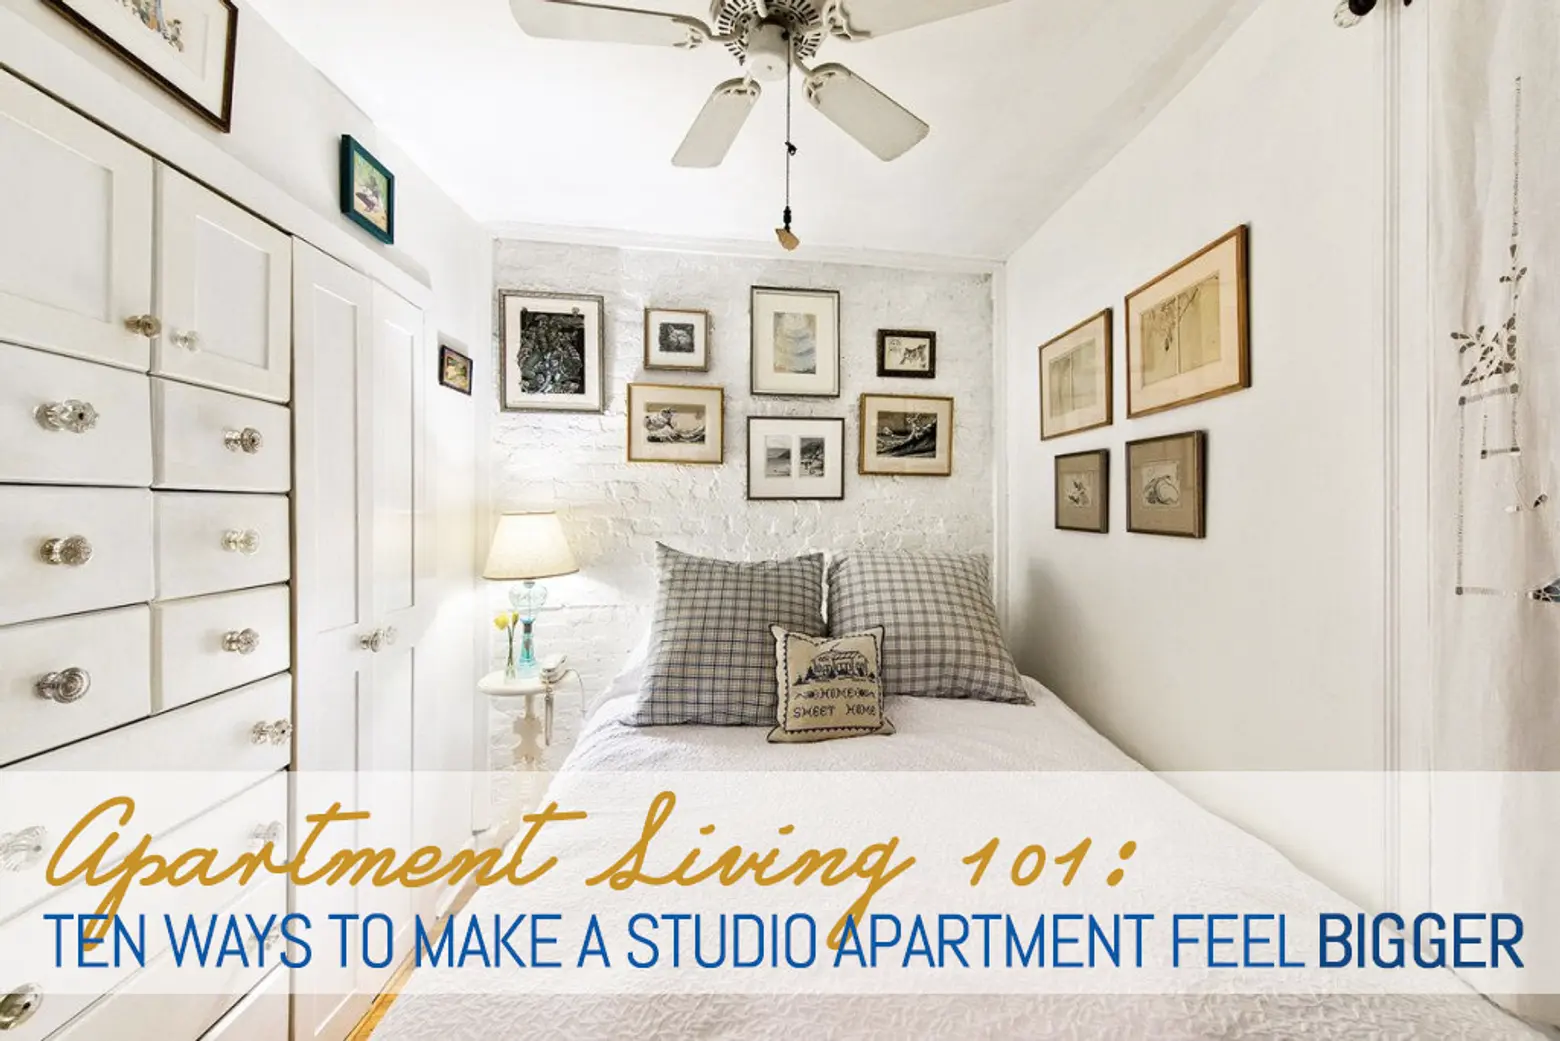 10 ways to make a studio apartment feel bigger